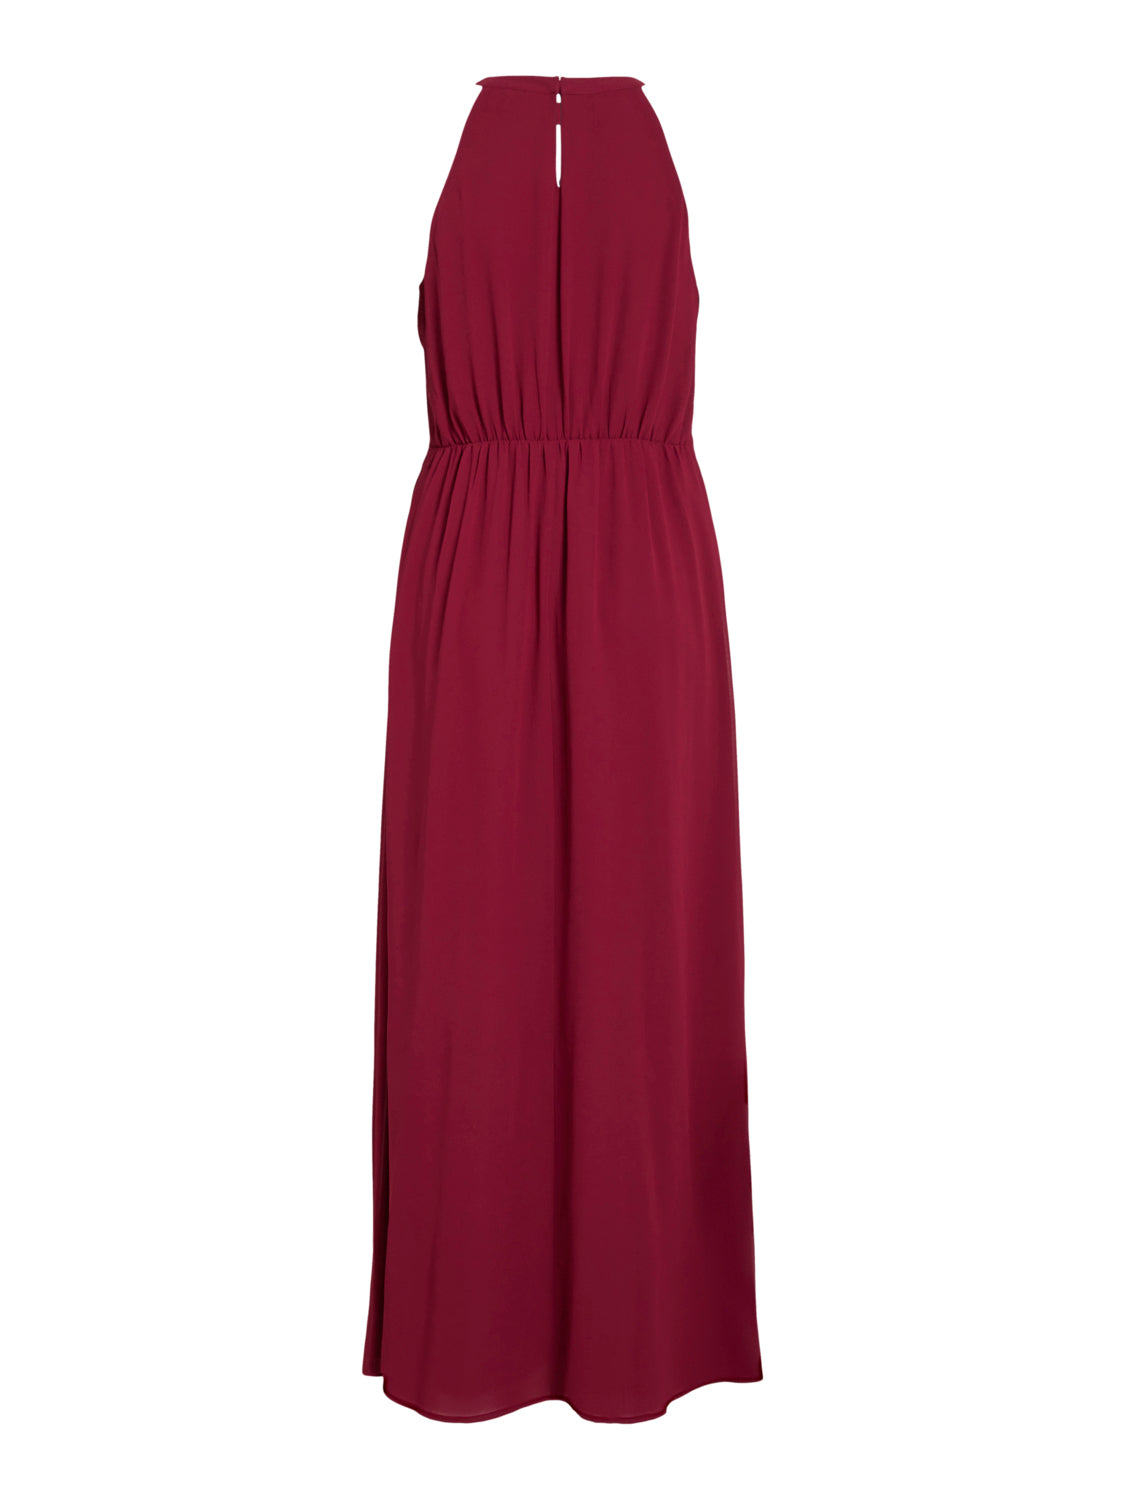 VIMILINA Dress - Beet Red